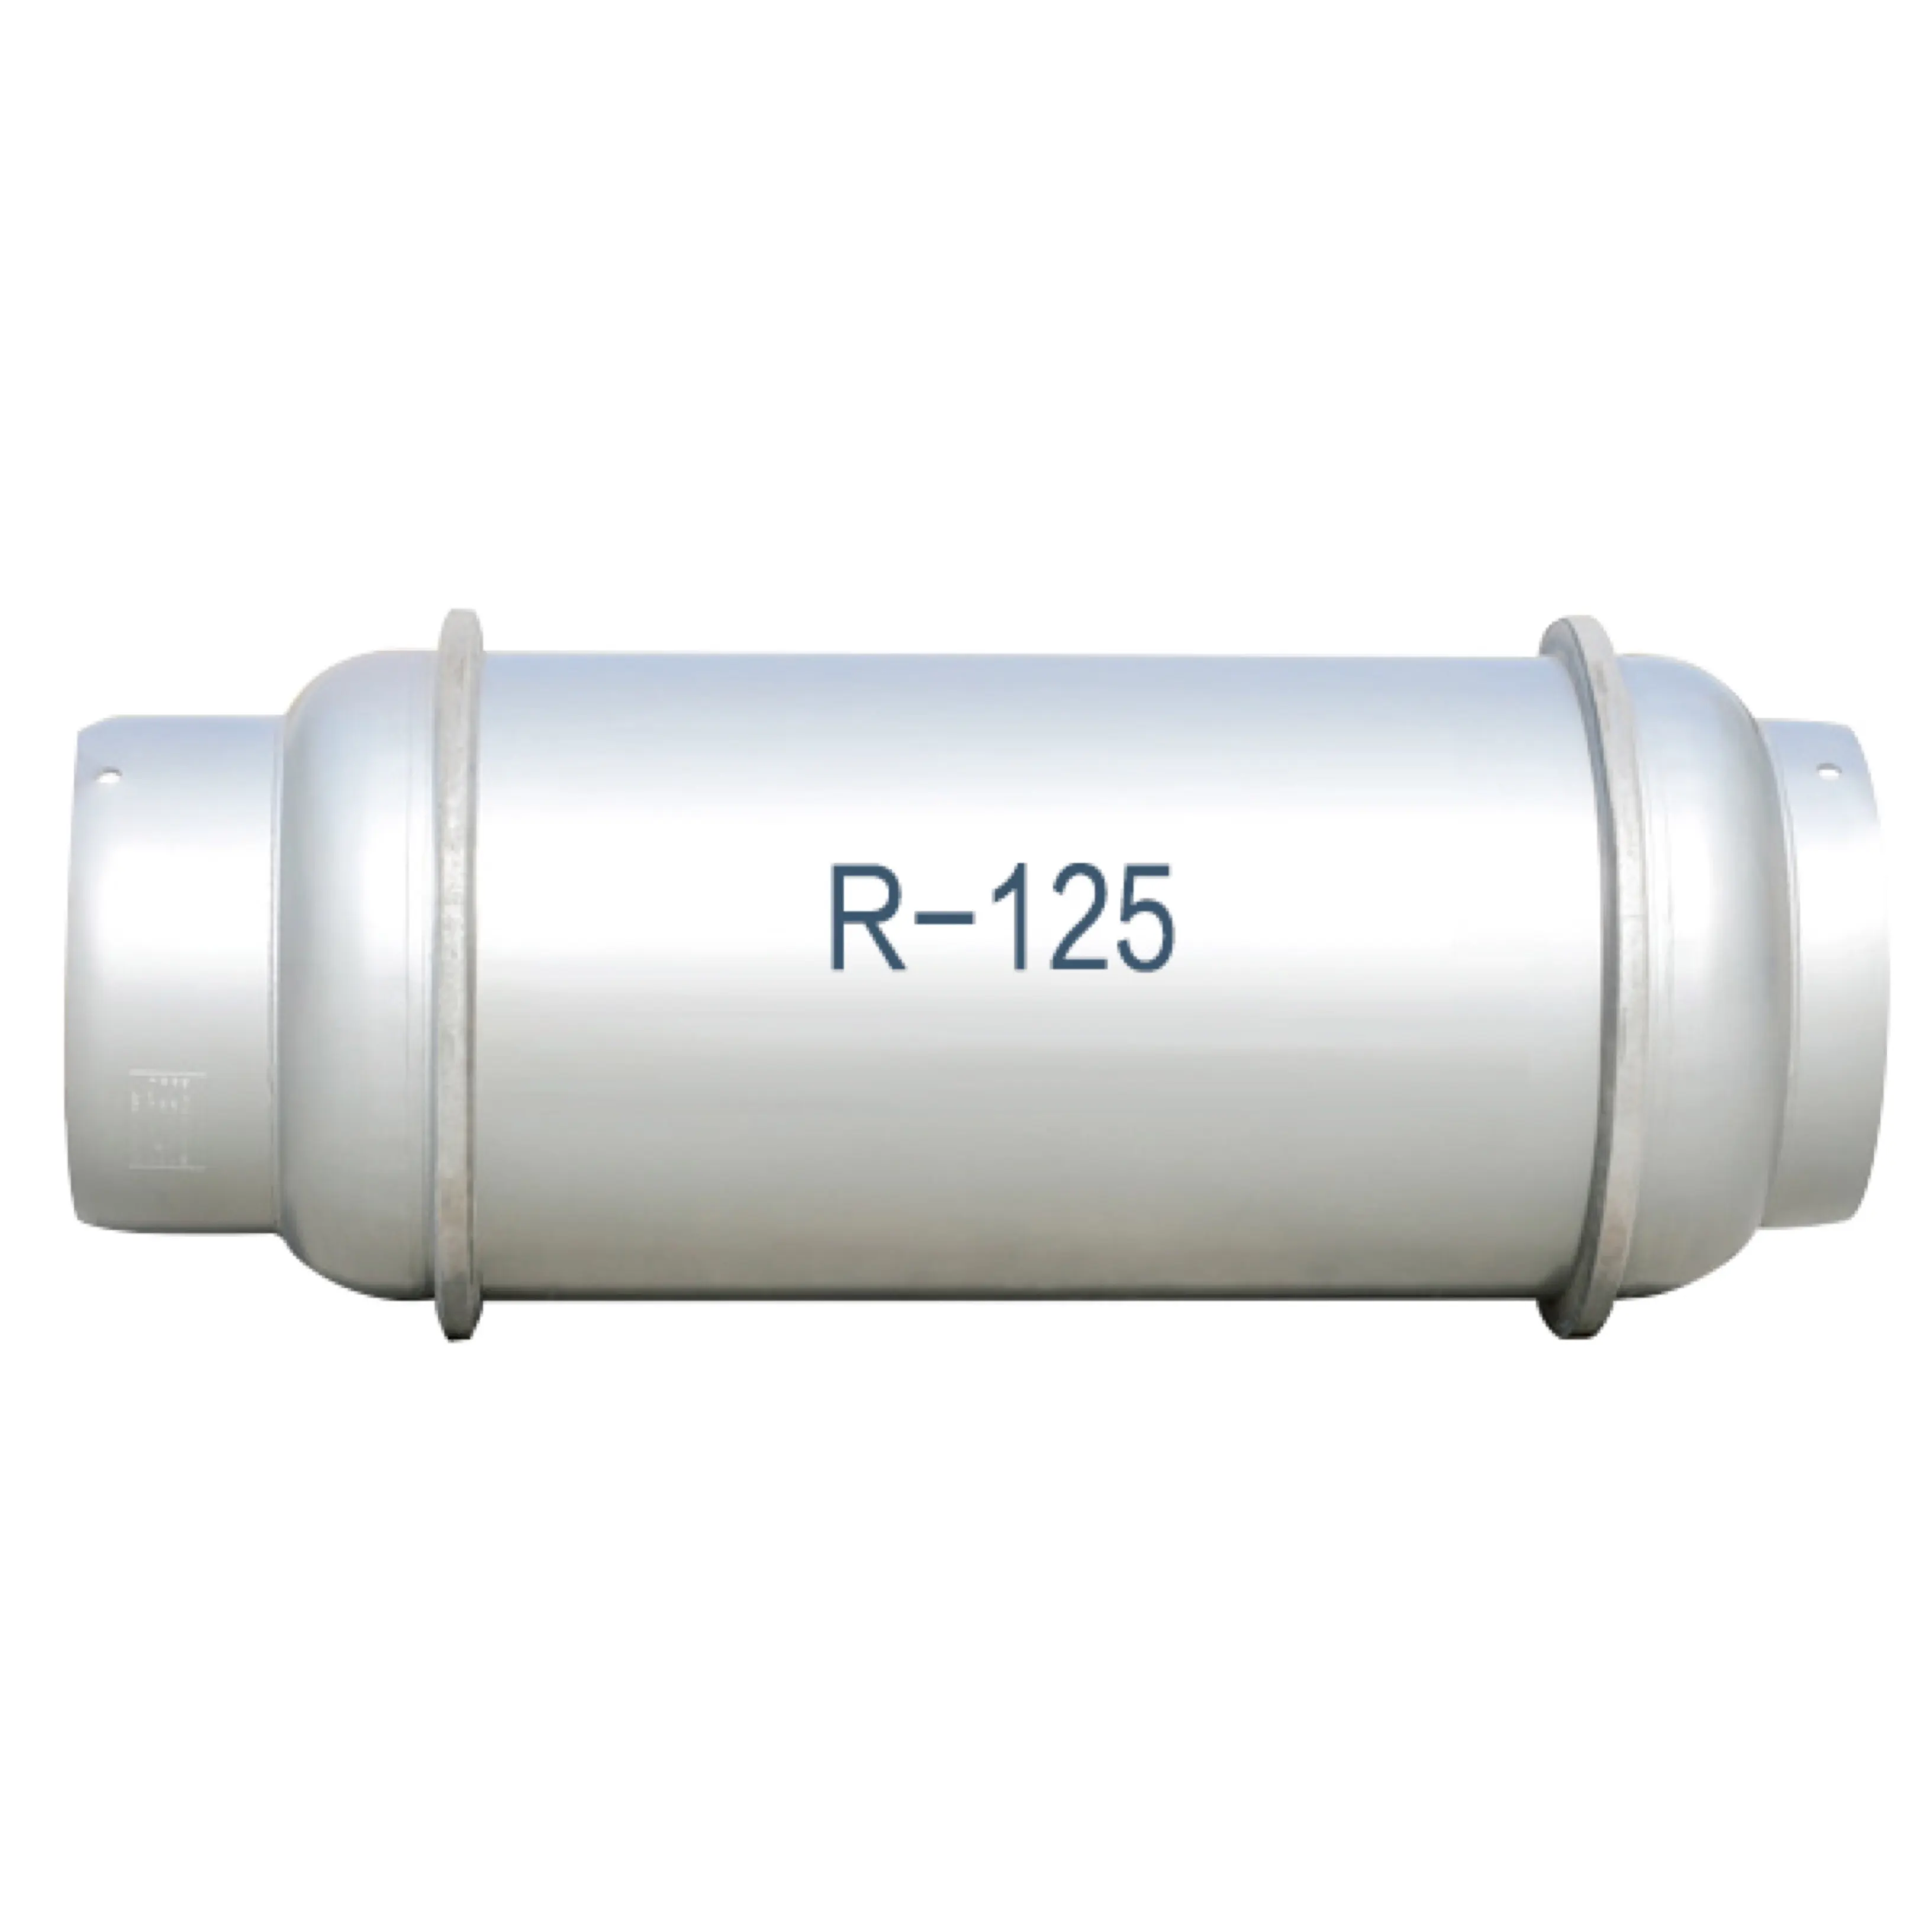 R125 Ac Conditionering Gaskoelsysteem Ton Cilinder 660Kg